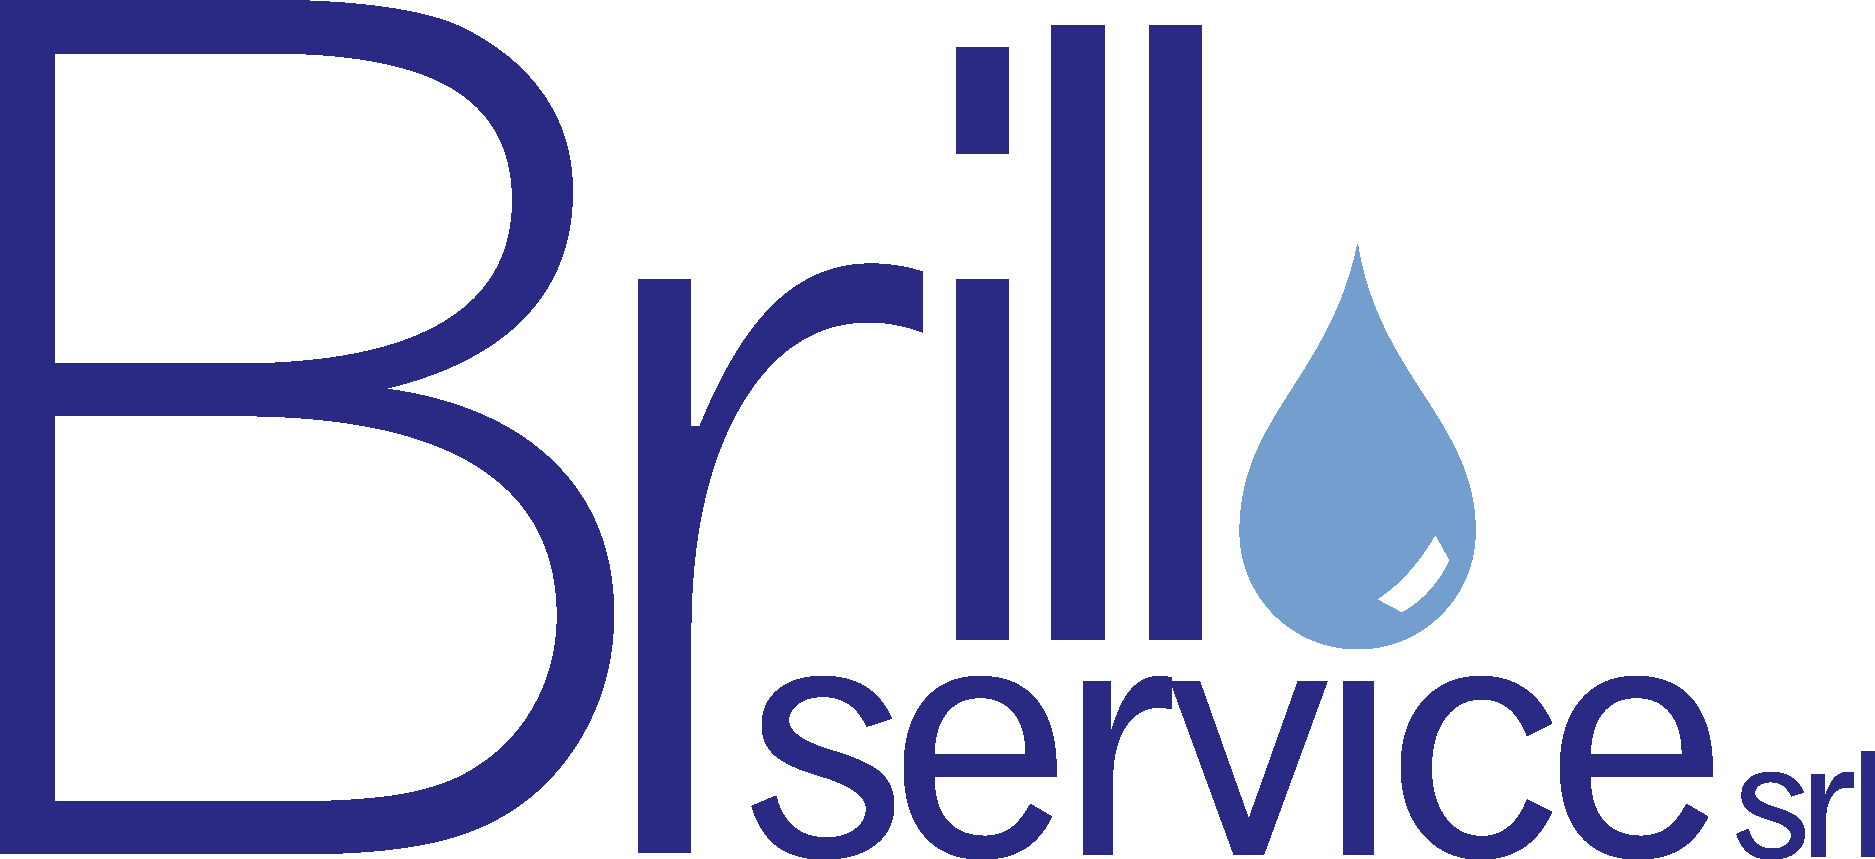 Brill service Logo Vector